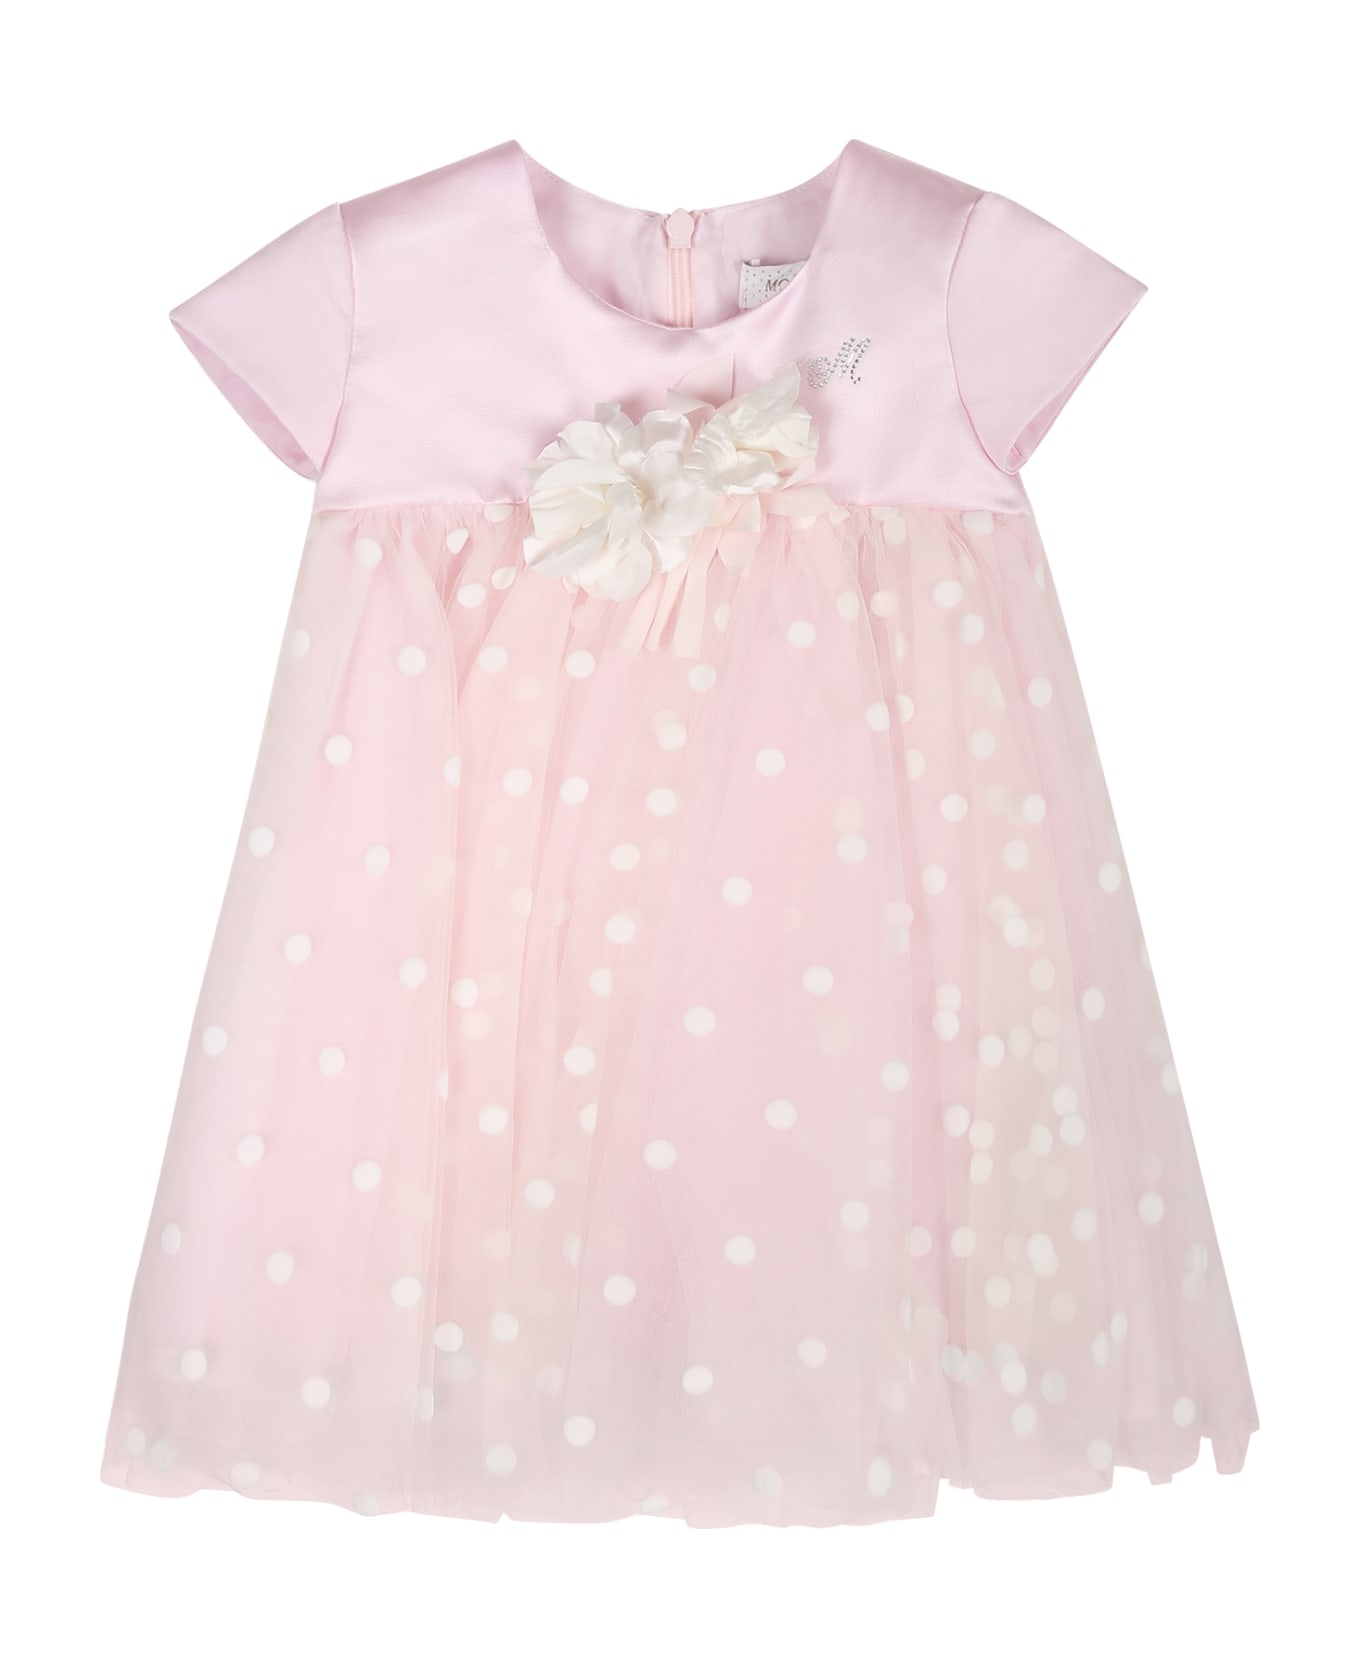 Monnalisa Pink Dress For Baby Girl With Polka Dots - Pink